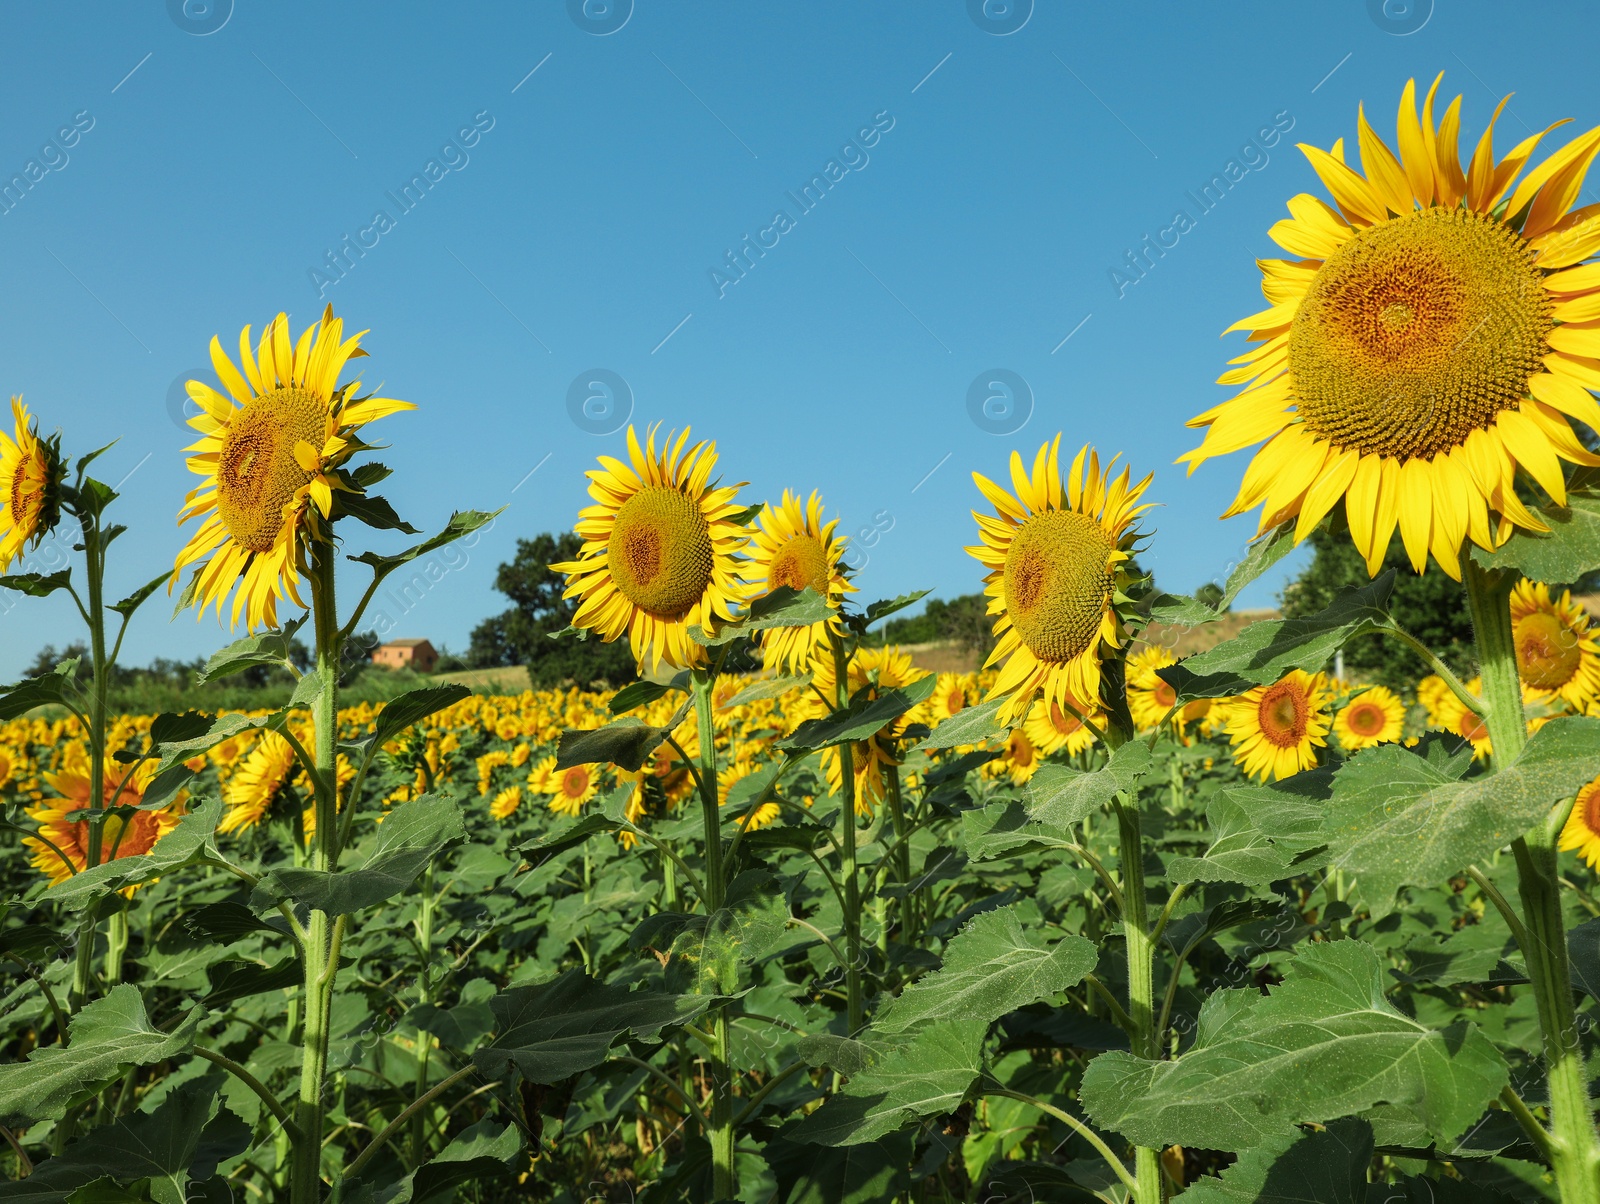 Photo of Sunflowers growing in field under blue sky